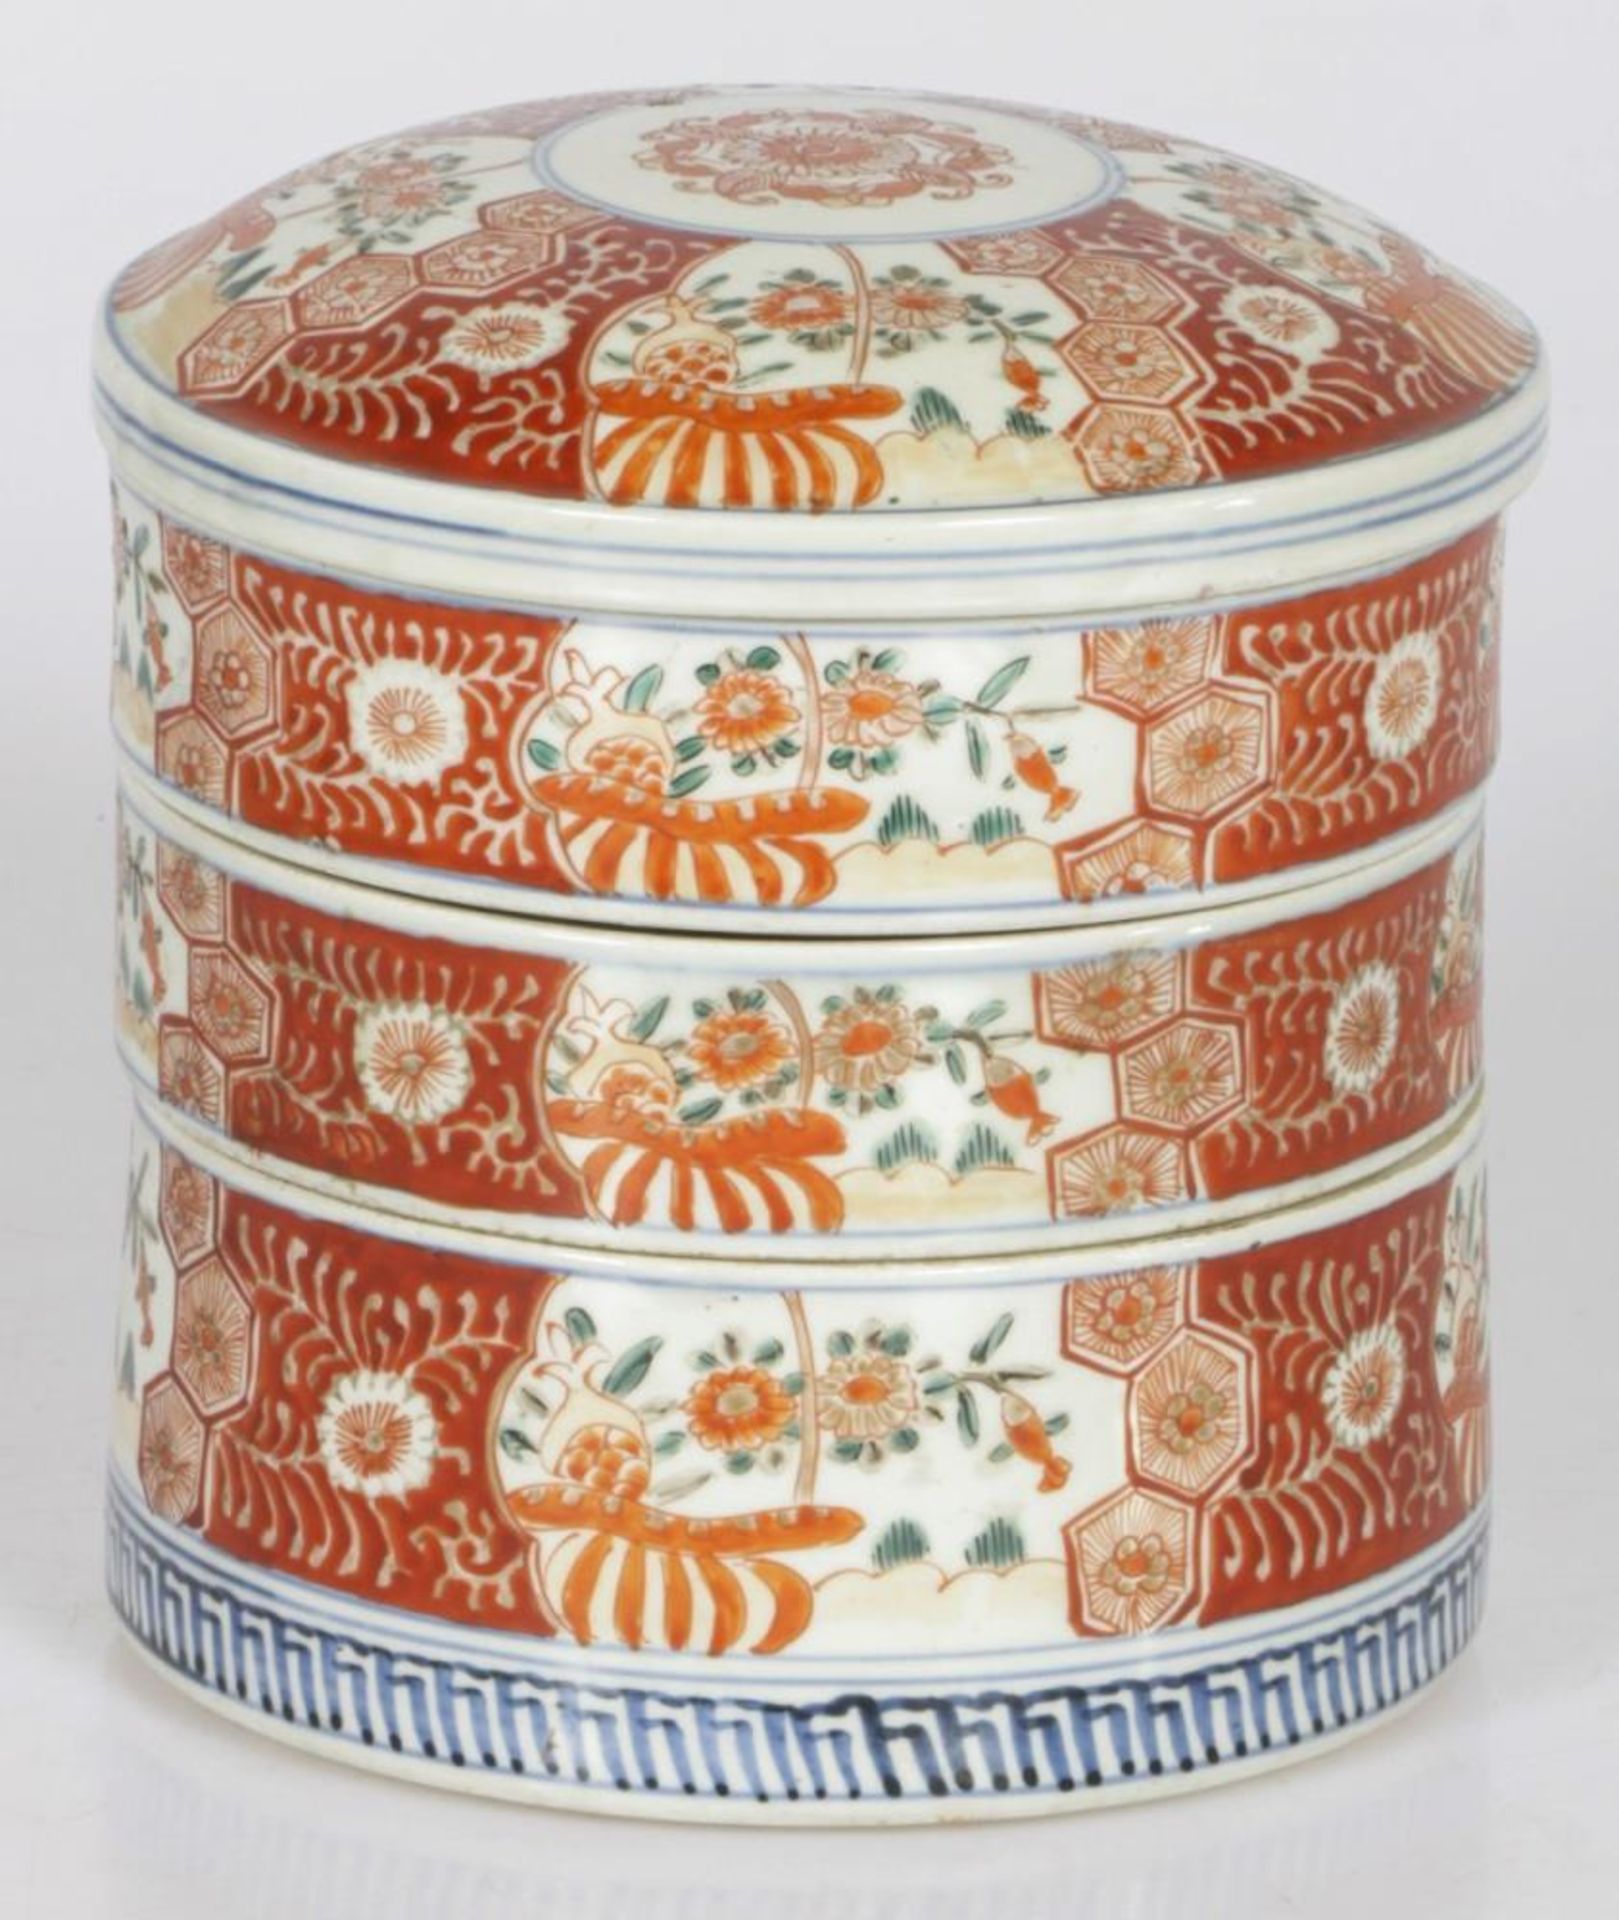 An Arita porcelain lidded box, Japan, ca. 1900.